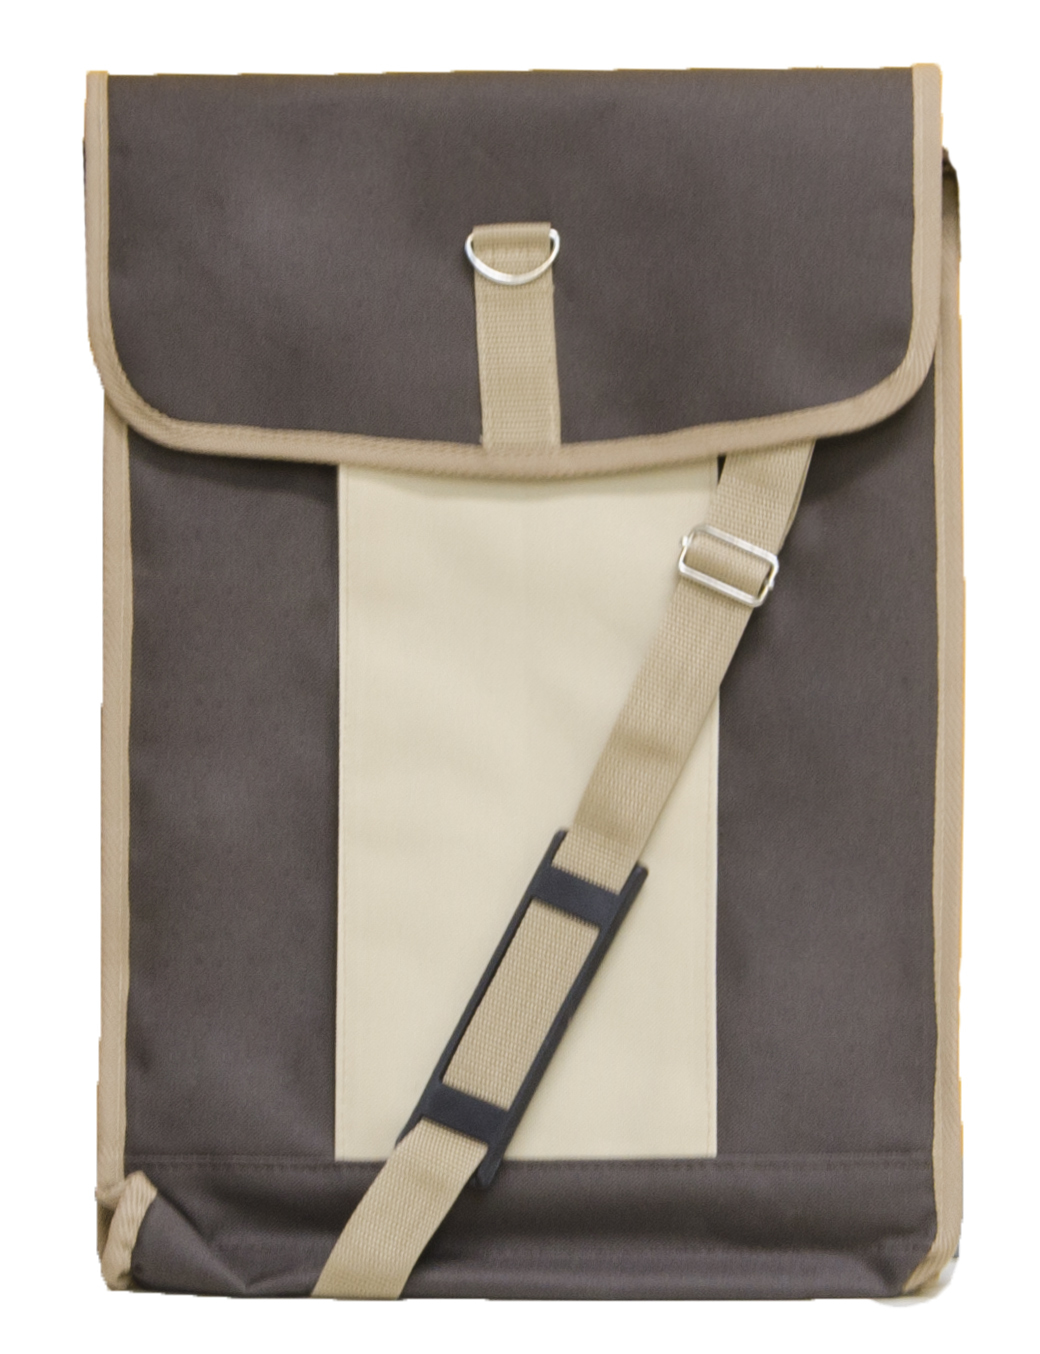 Сумка для планшета 42х30 (жест.) коричневая с бежевым карманом сумка c ручками laura vita yh201108 5